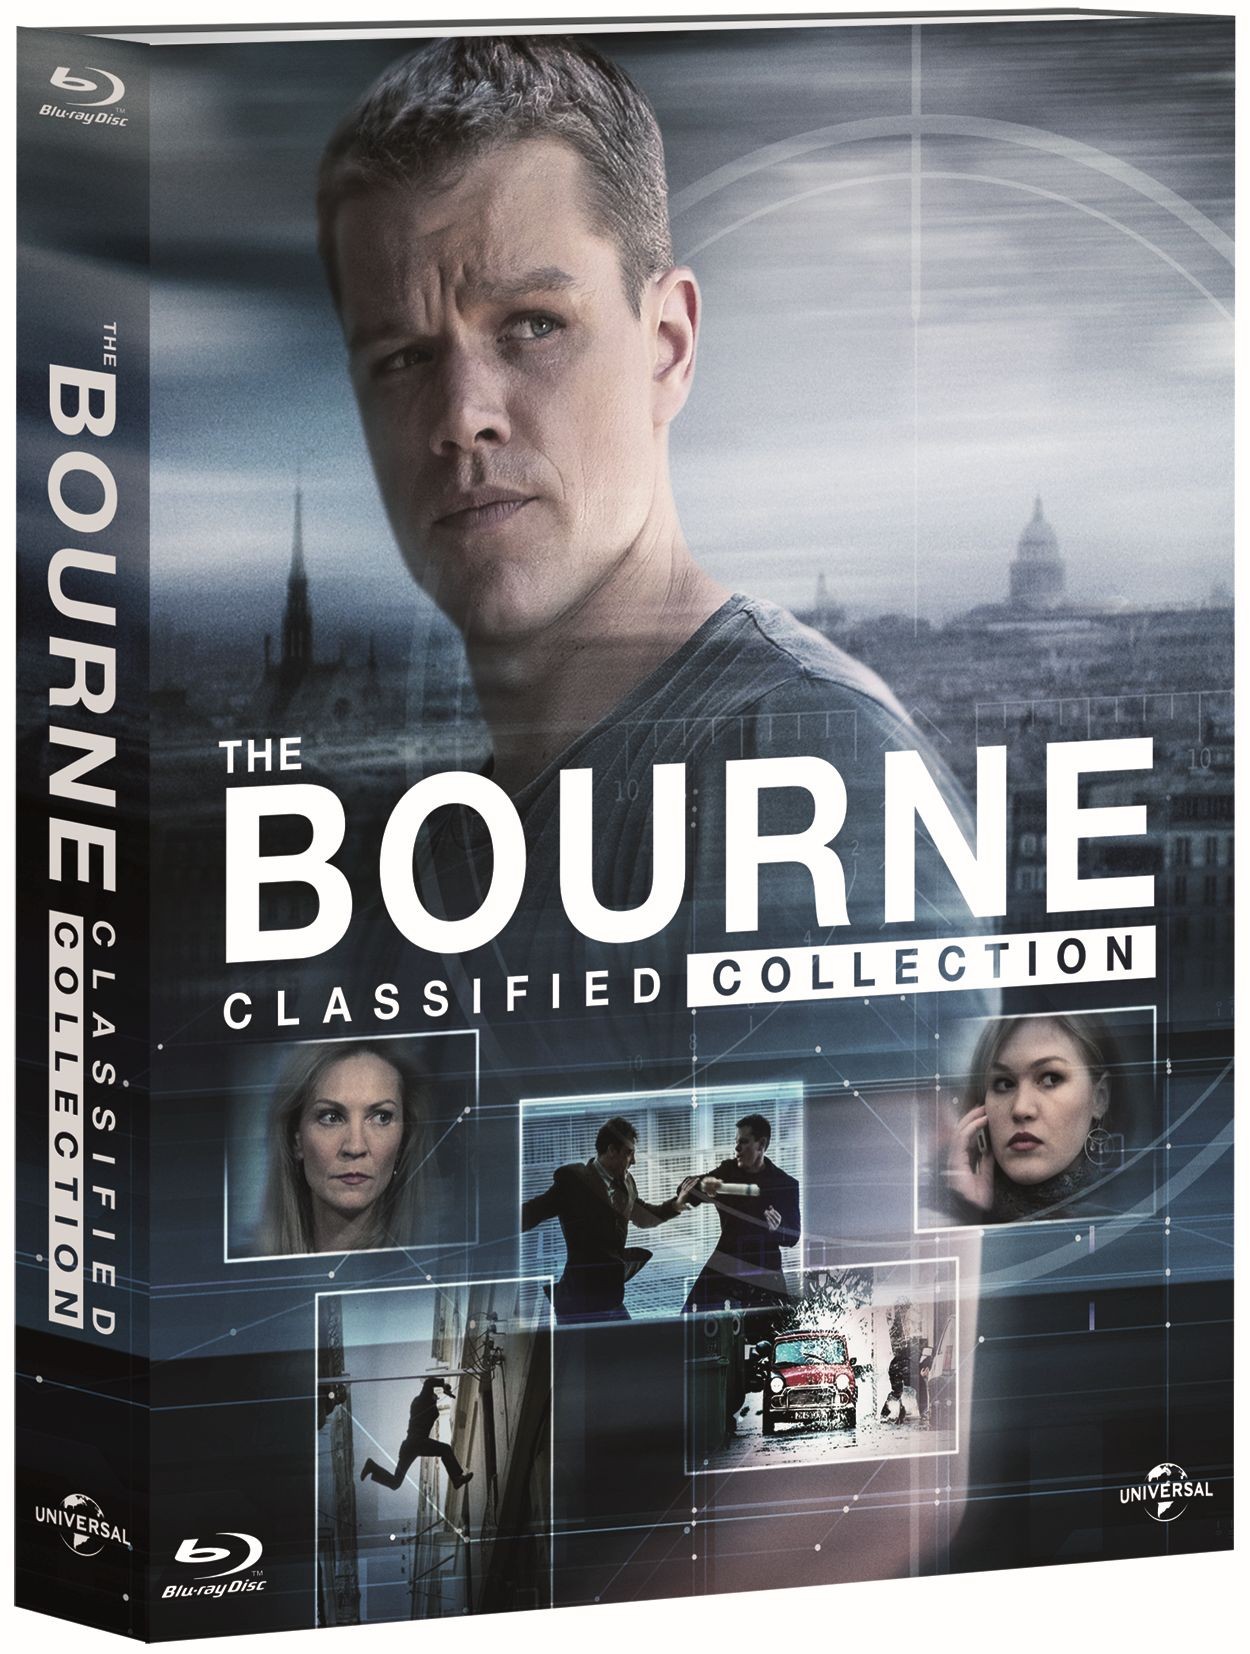 Bourne Collection BR digibook pack.jpg